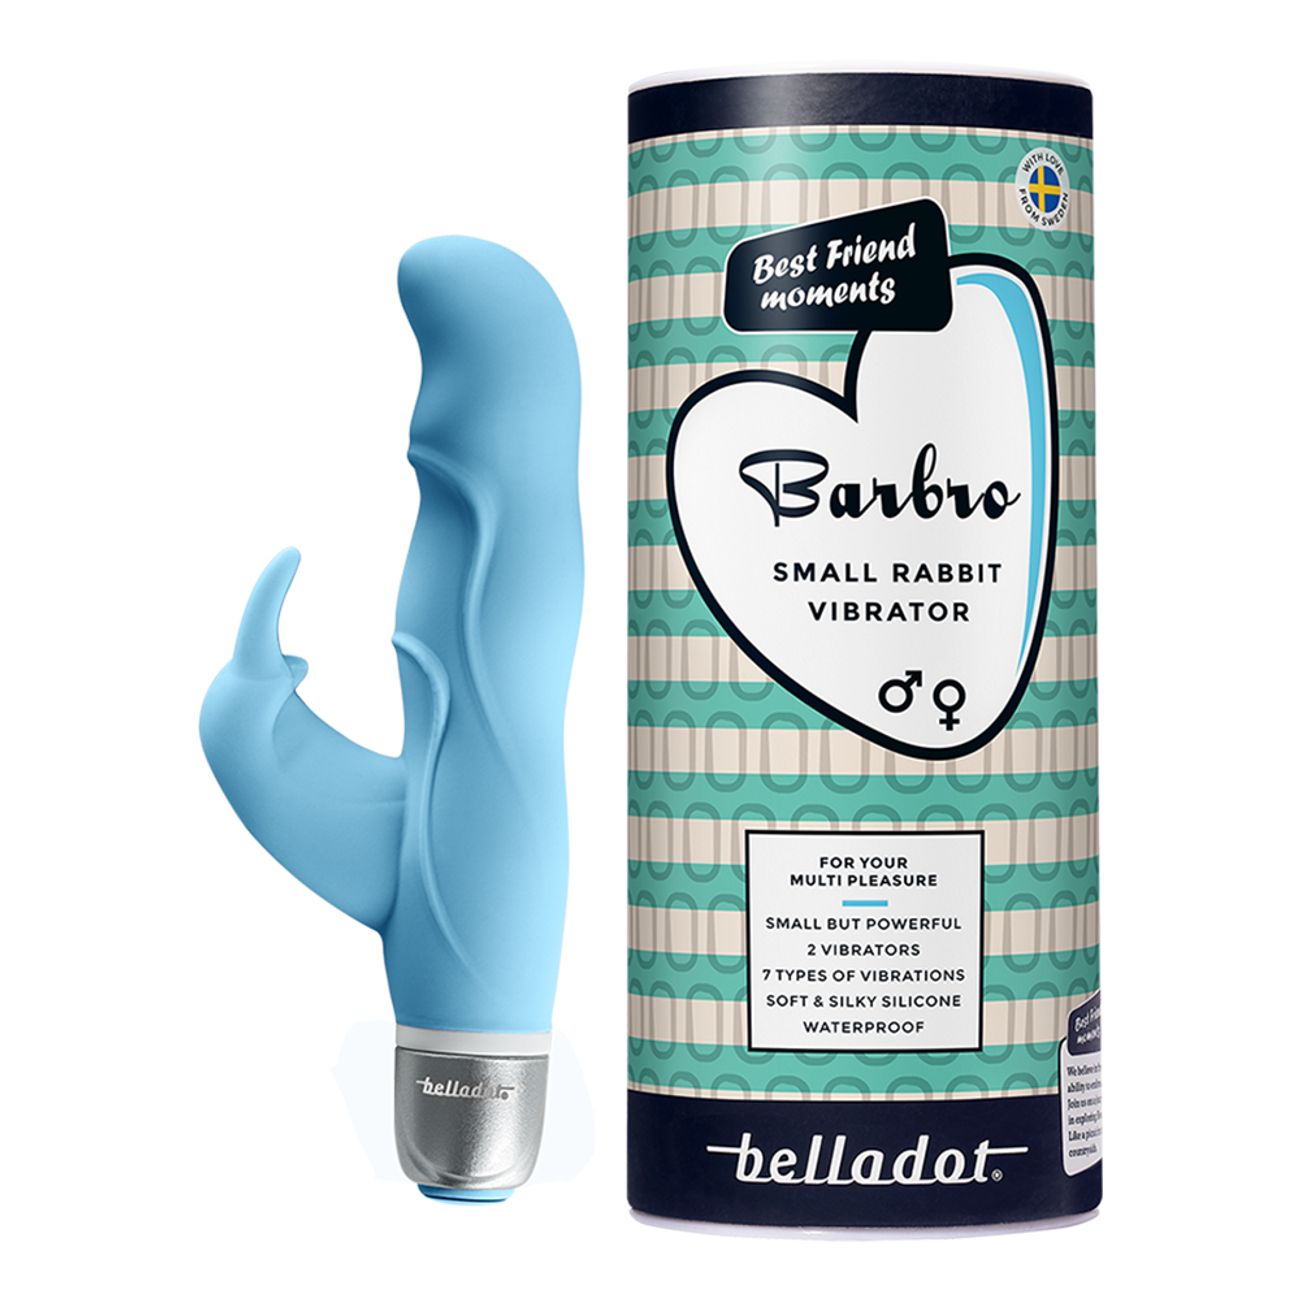 belladot-vibrator-barbro-3